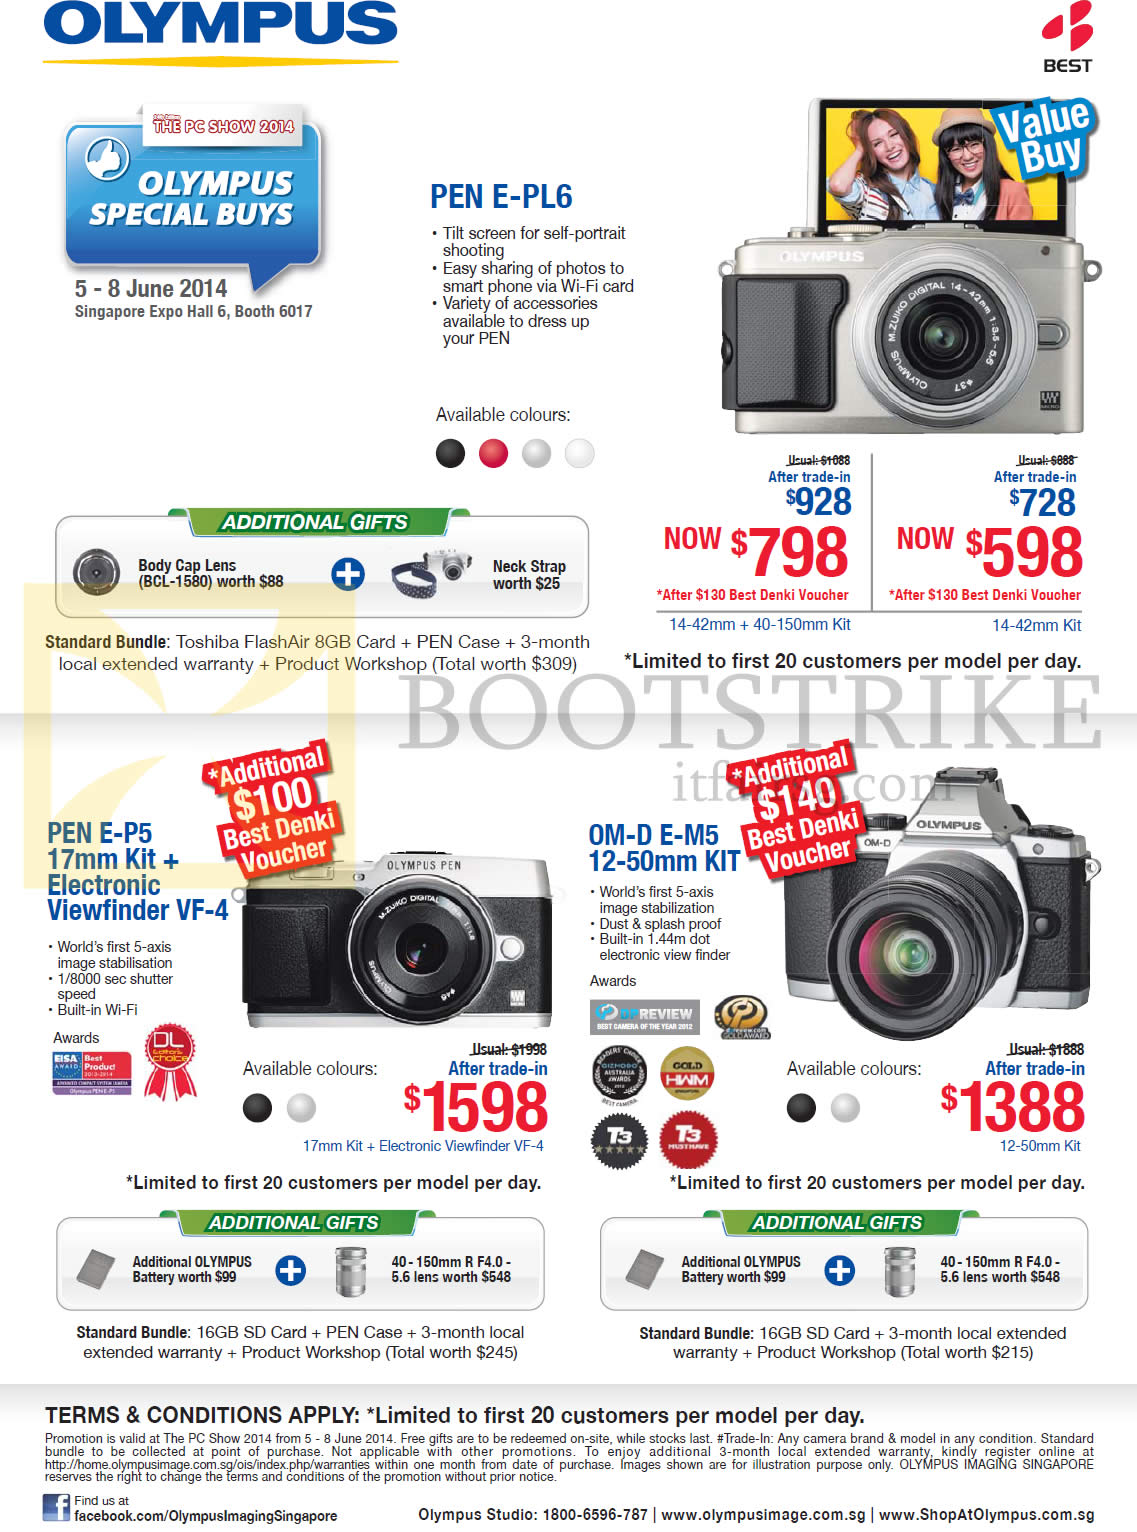 PC SHOW 2014 price list image brochure of Olympus Digital Cameras Pen E-PL6, Pen E-P5, OM-D E-M5